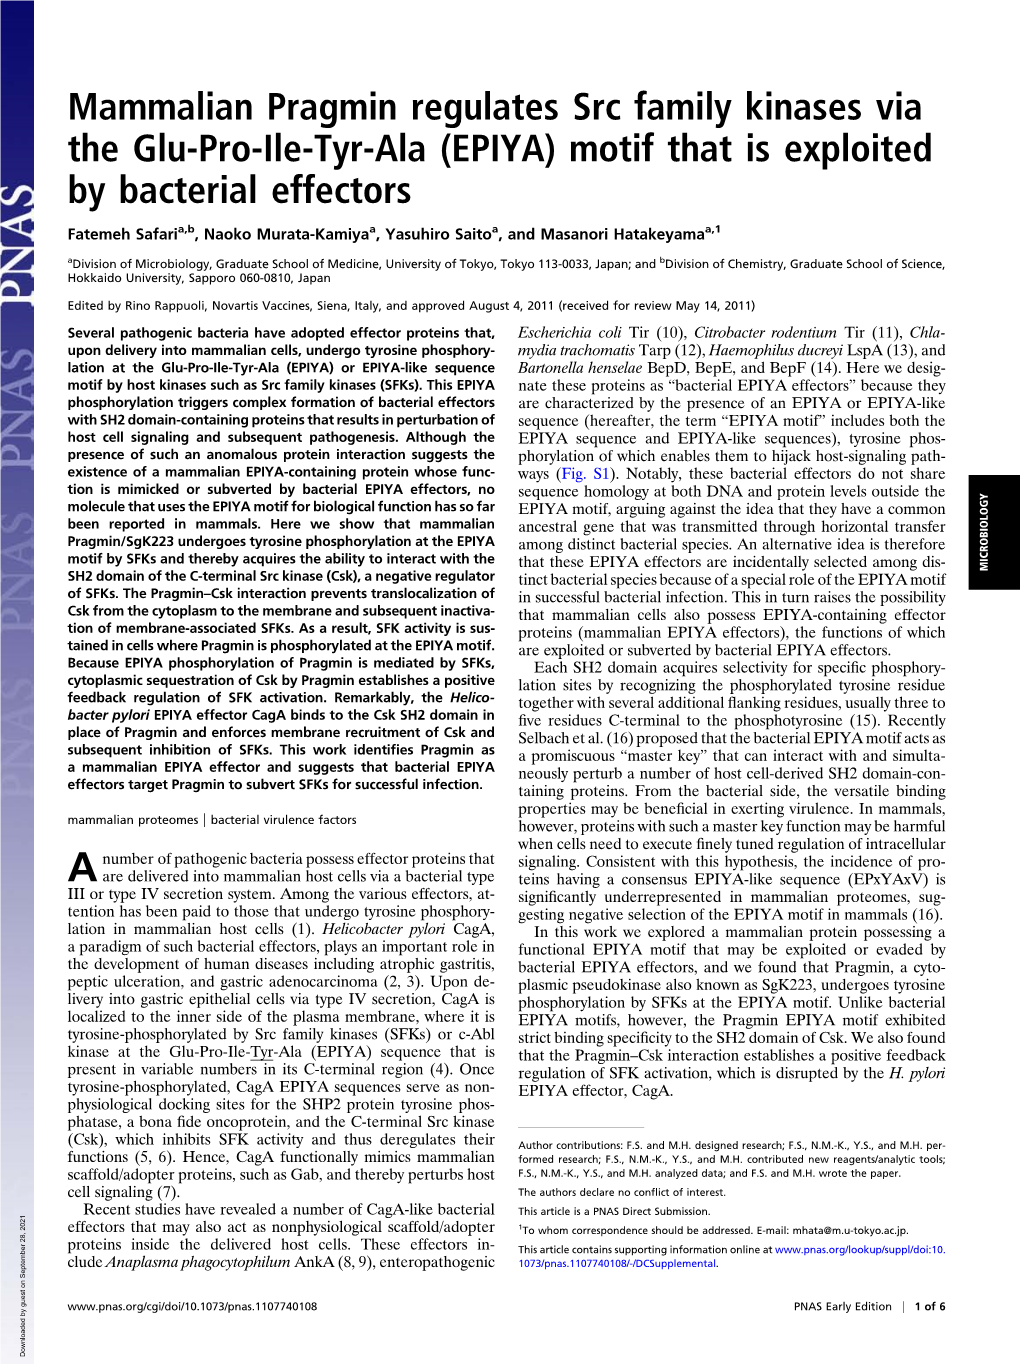 Mammalian Pragmin Regulates Src Family Kinases Via the Glu-Pro-Ile-Tyr-Ala (EPIYA) Motif That Is Exploited by Bacterial Effectors